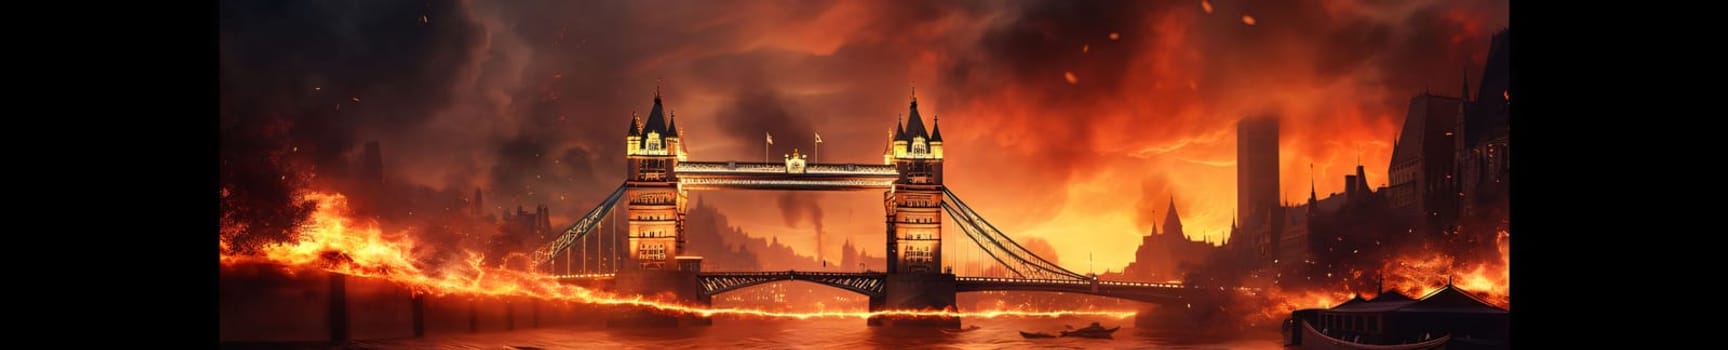 Banner: Tower Bridge burning in London, UK, panoramic banner